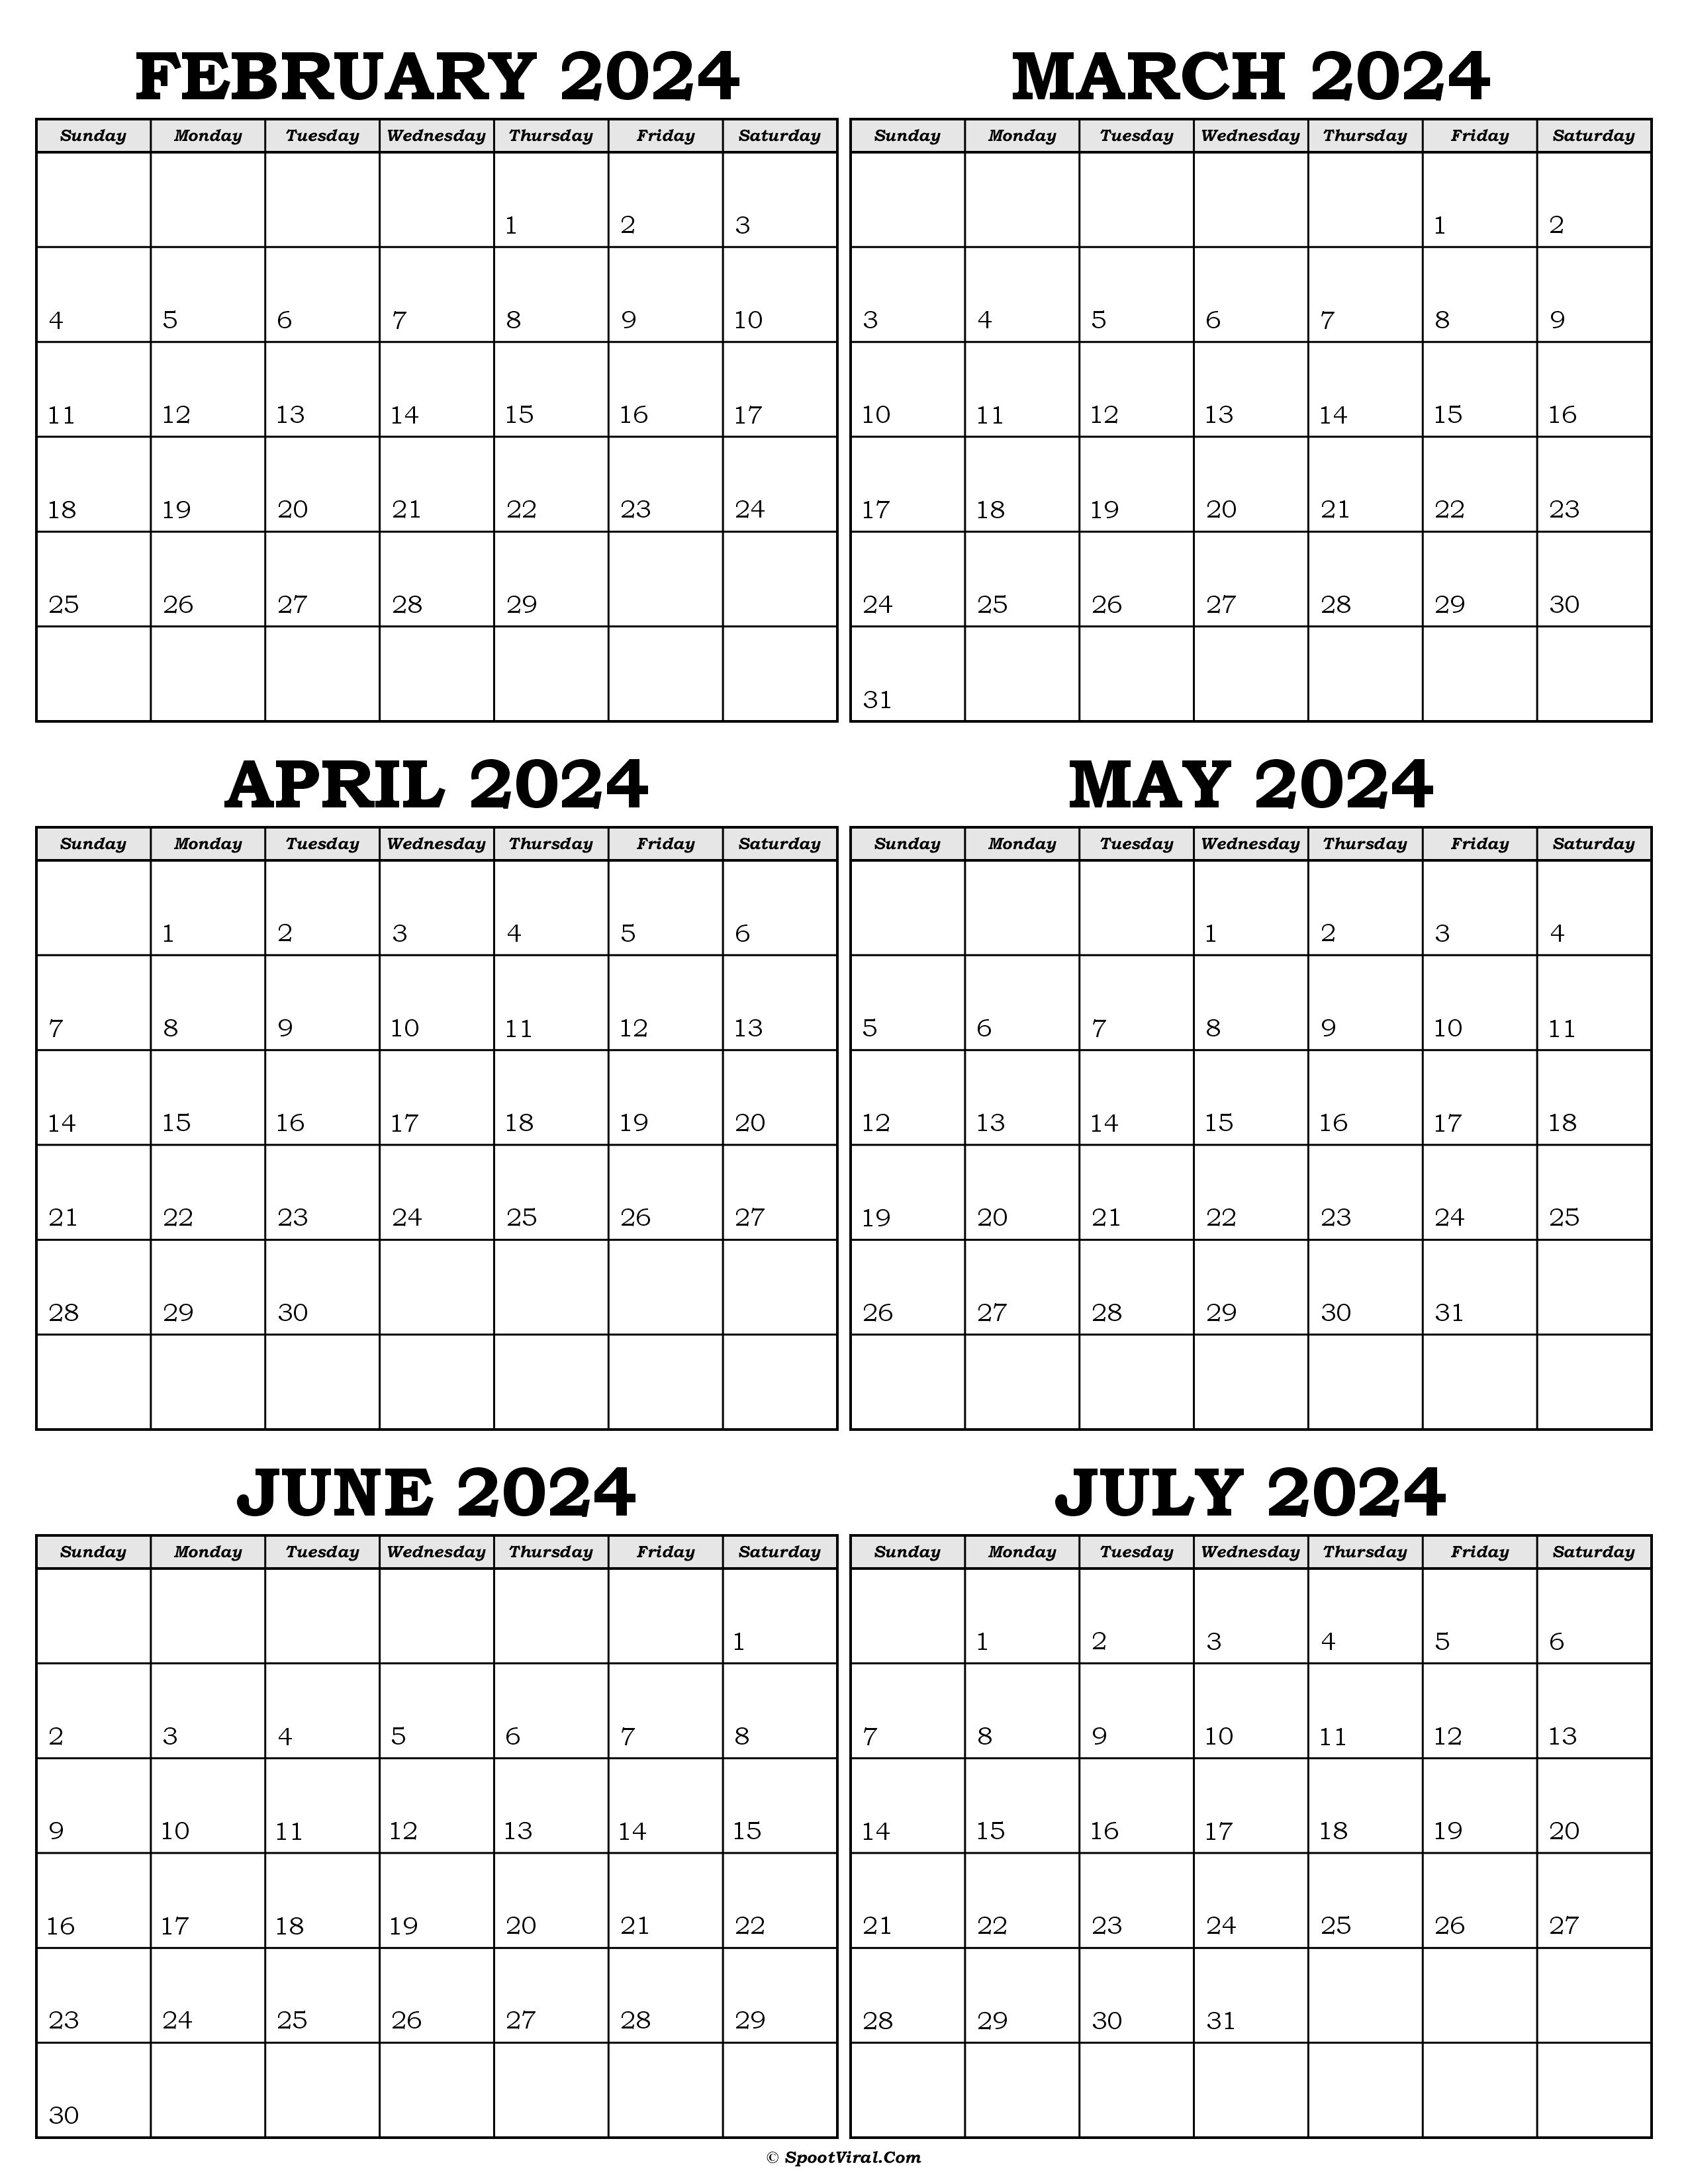 Calendar February to July 2024